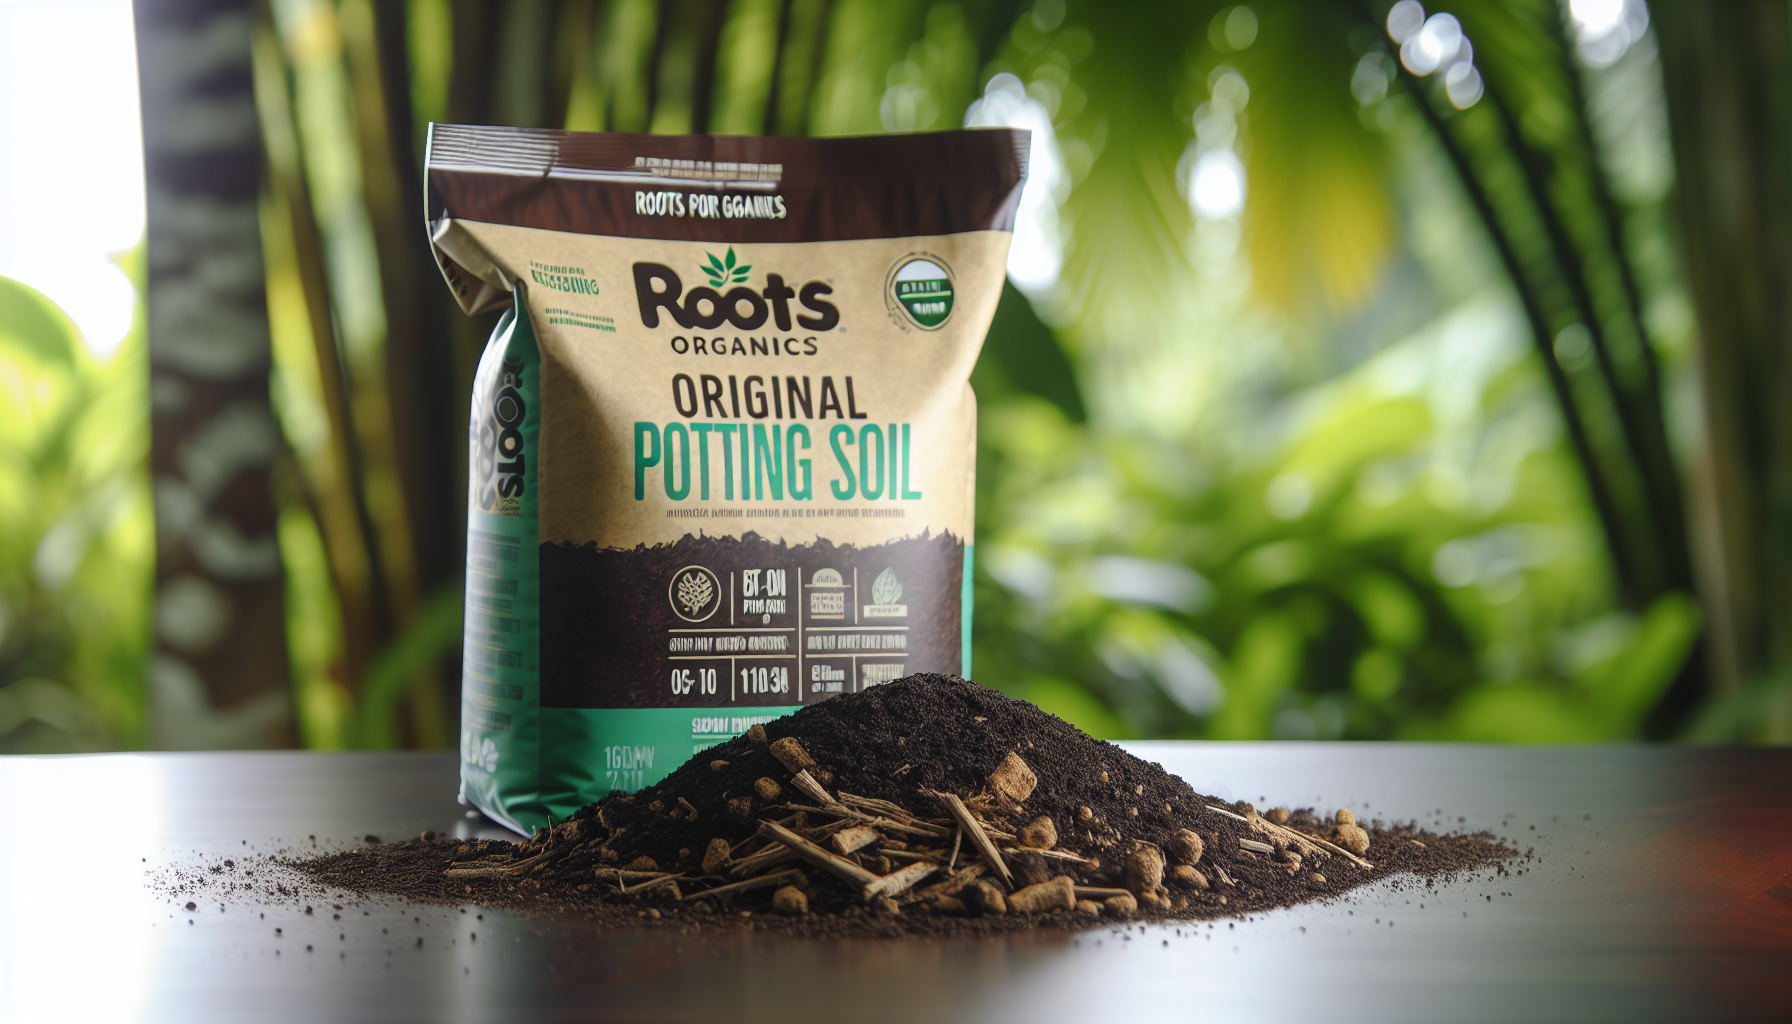 Bag of original potting soil by Roots Organics